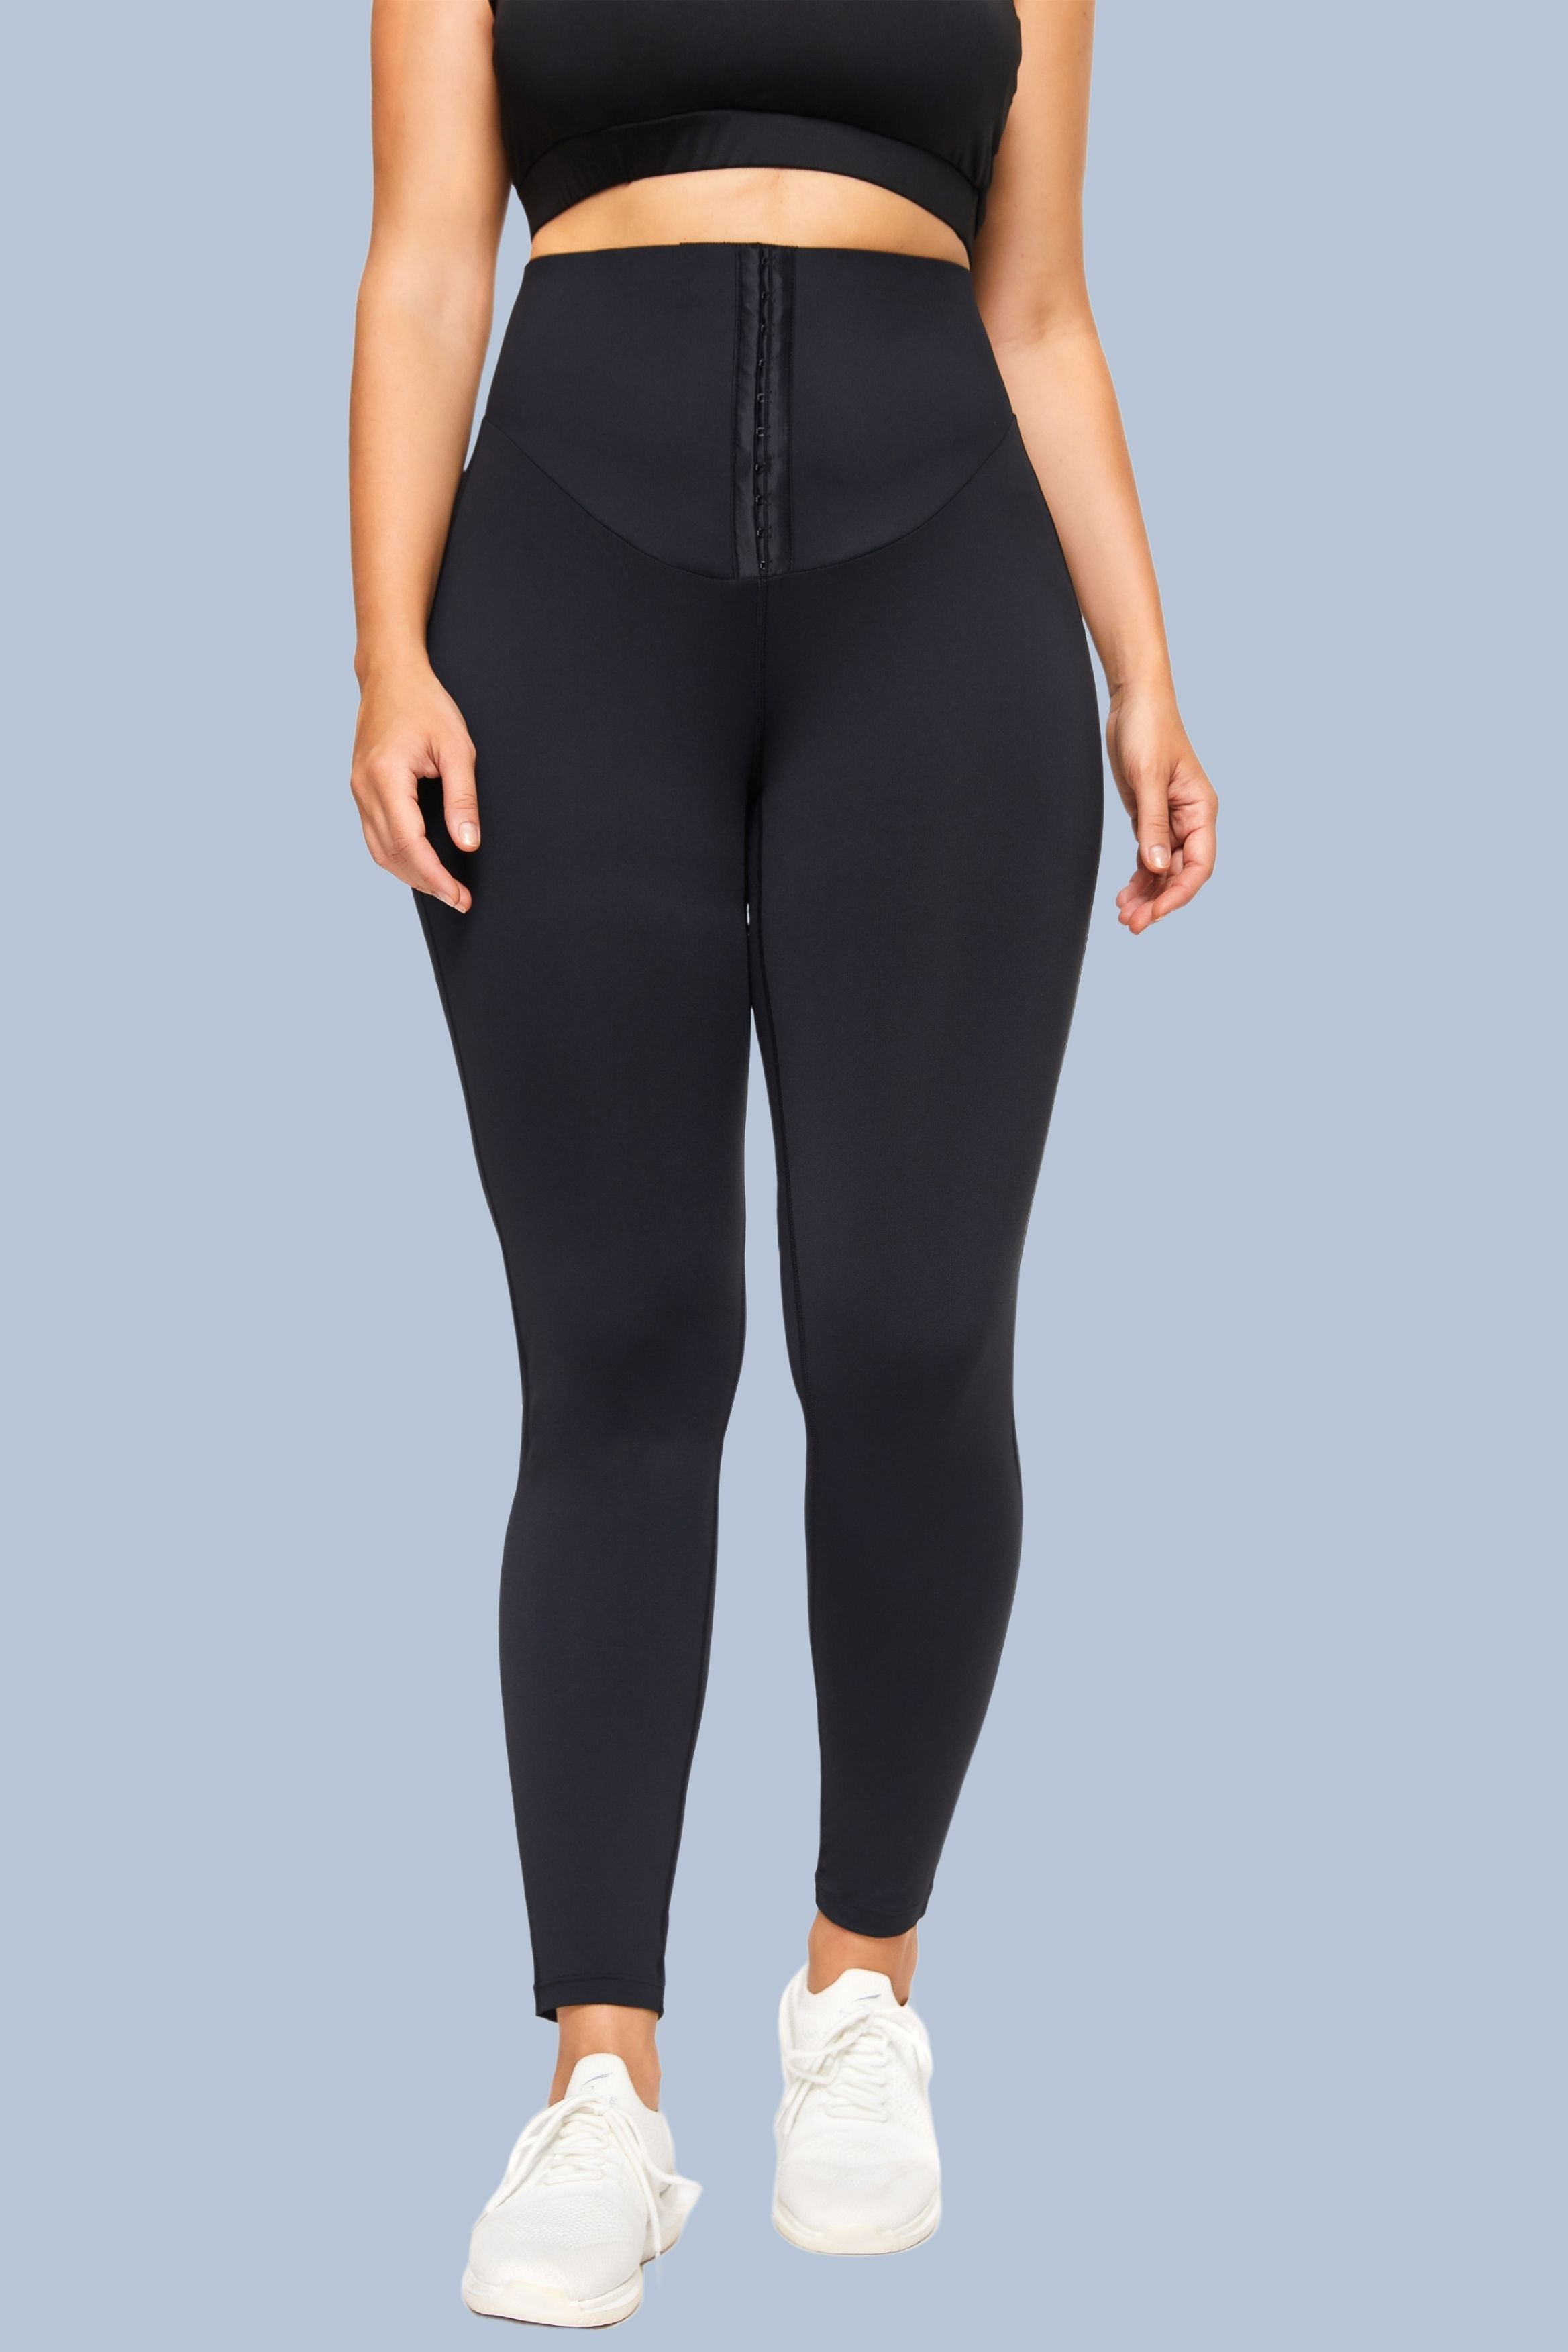  yeuG Plus Size Leggings for Women-Stretchy X-Large-4X Tummy  Control High Waist Spandex Workout Black Yoga Pants(Black,Grey(Long  Length),X-Large) : Clothing, Shoes & Jewelry